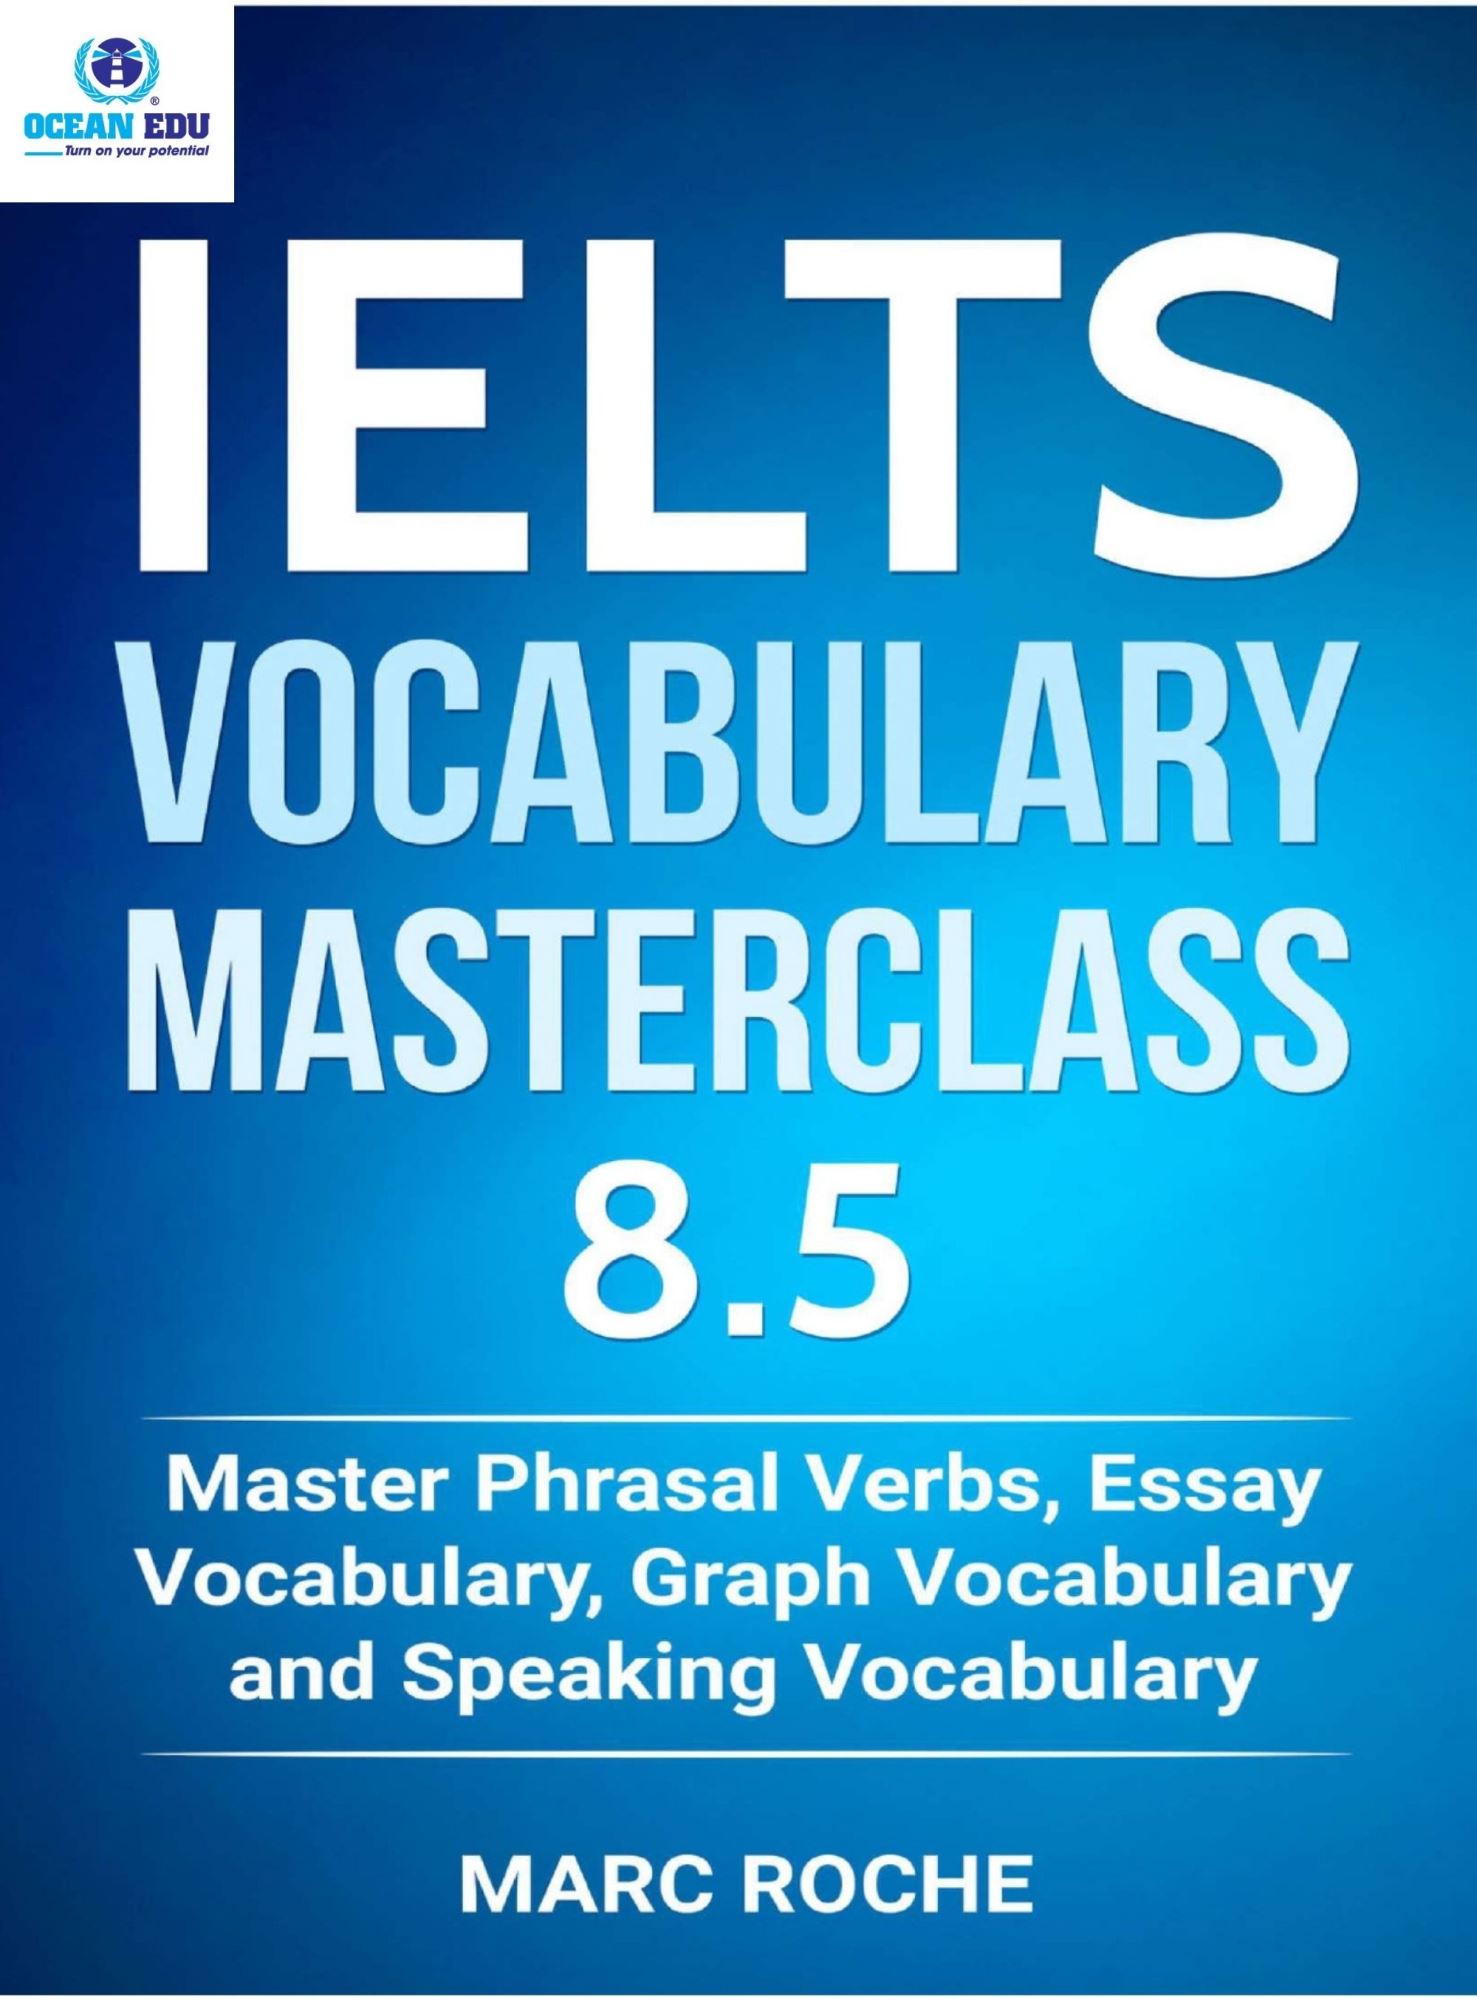 IELTS Vocabulary Masterclass 8.5 - Book 1